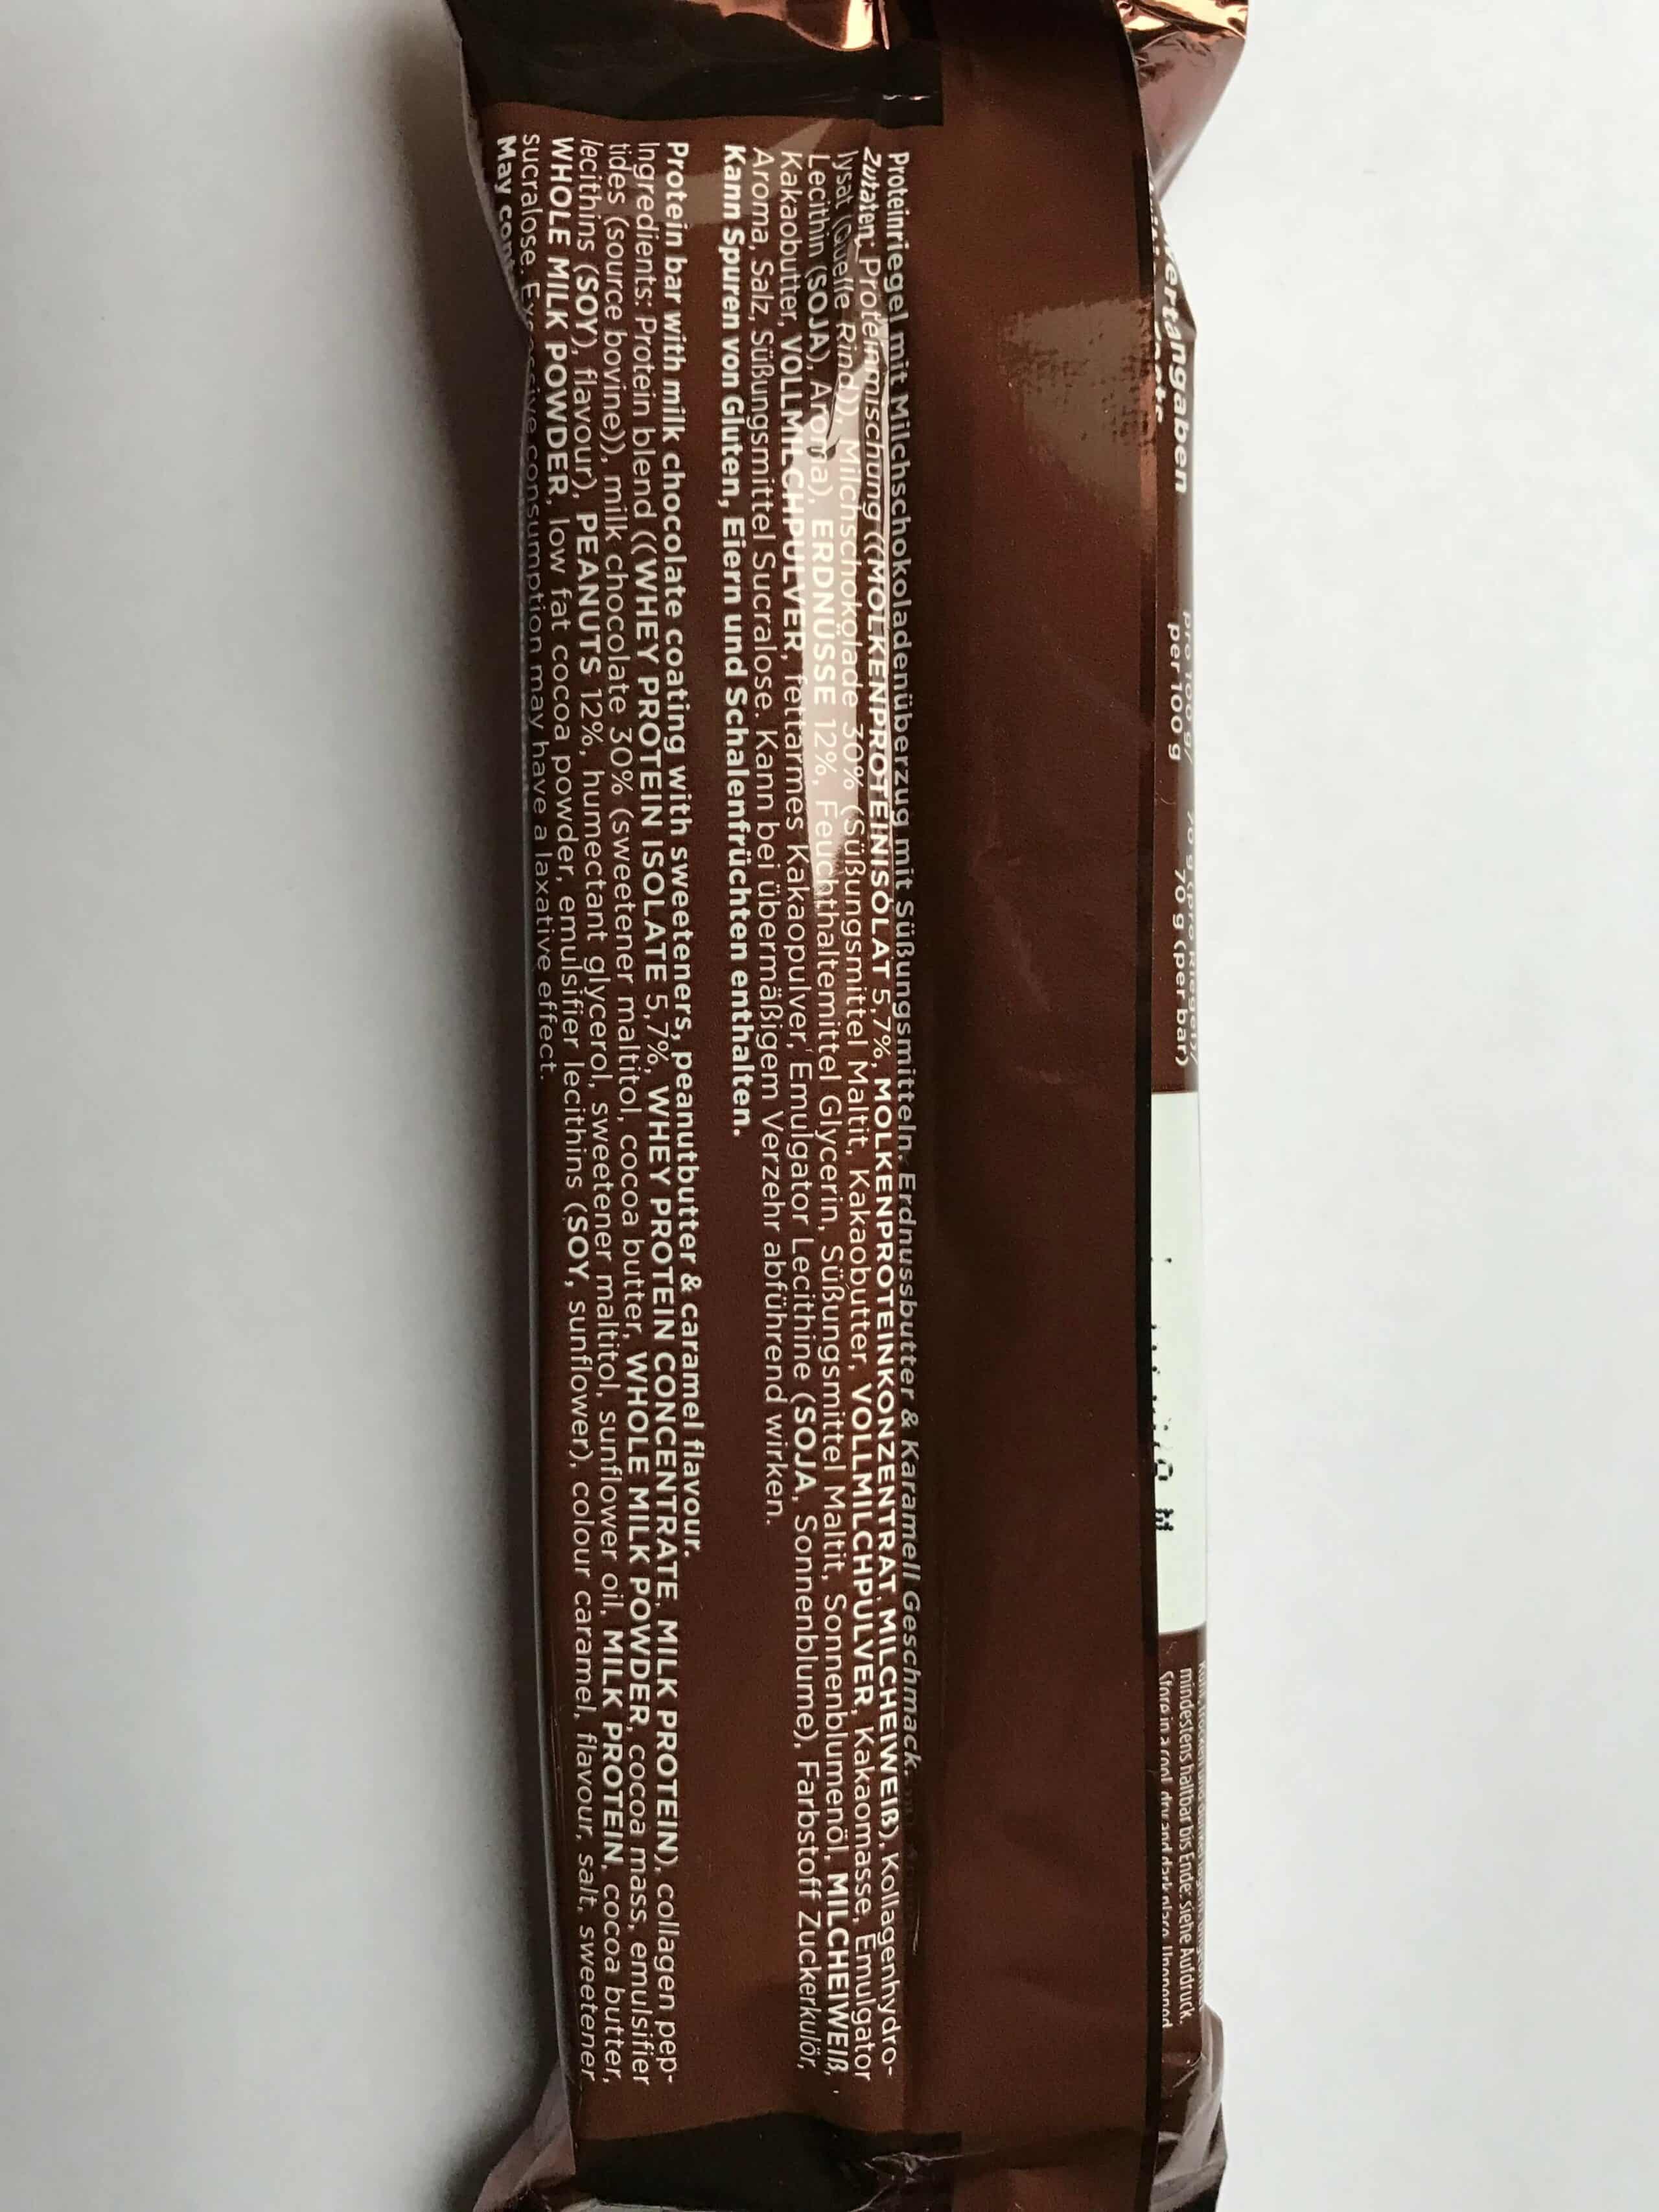 ESN Tasty Bar Chocolate Peanut Butter and Caramel Inhaltsstoffe